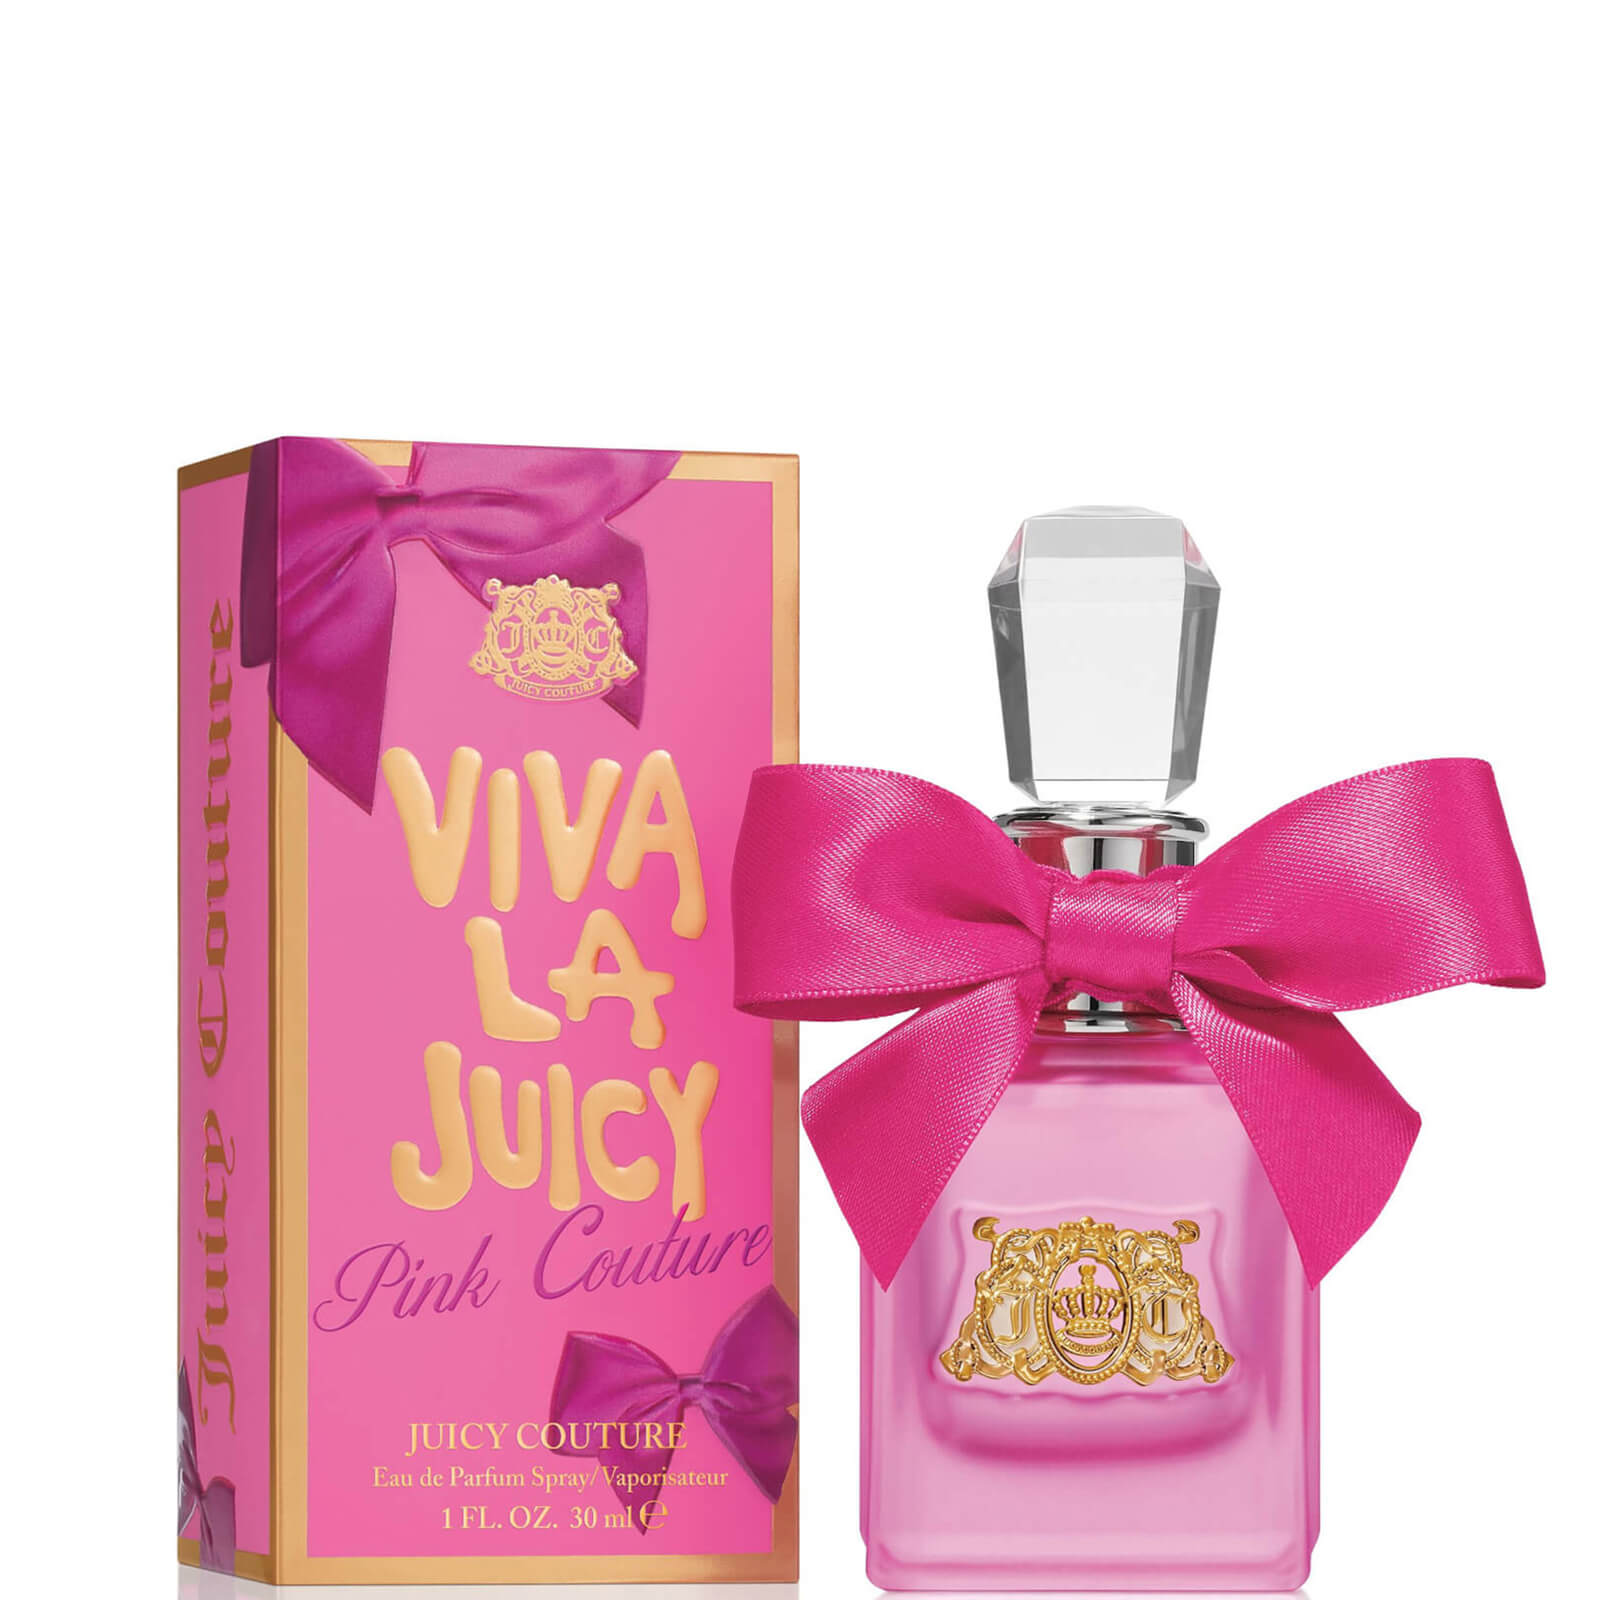 juicy-couture-viva-la-juicy-pink-couture-eau-de-parfum-spray-30ml